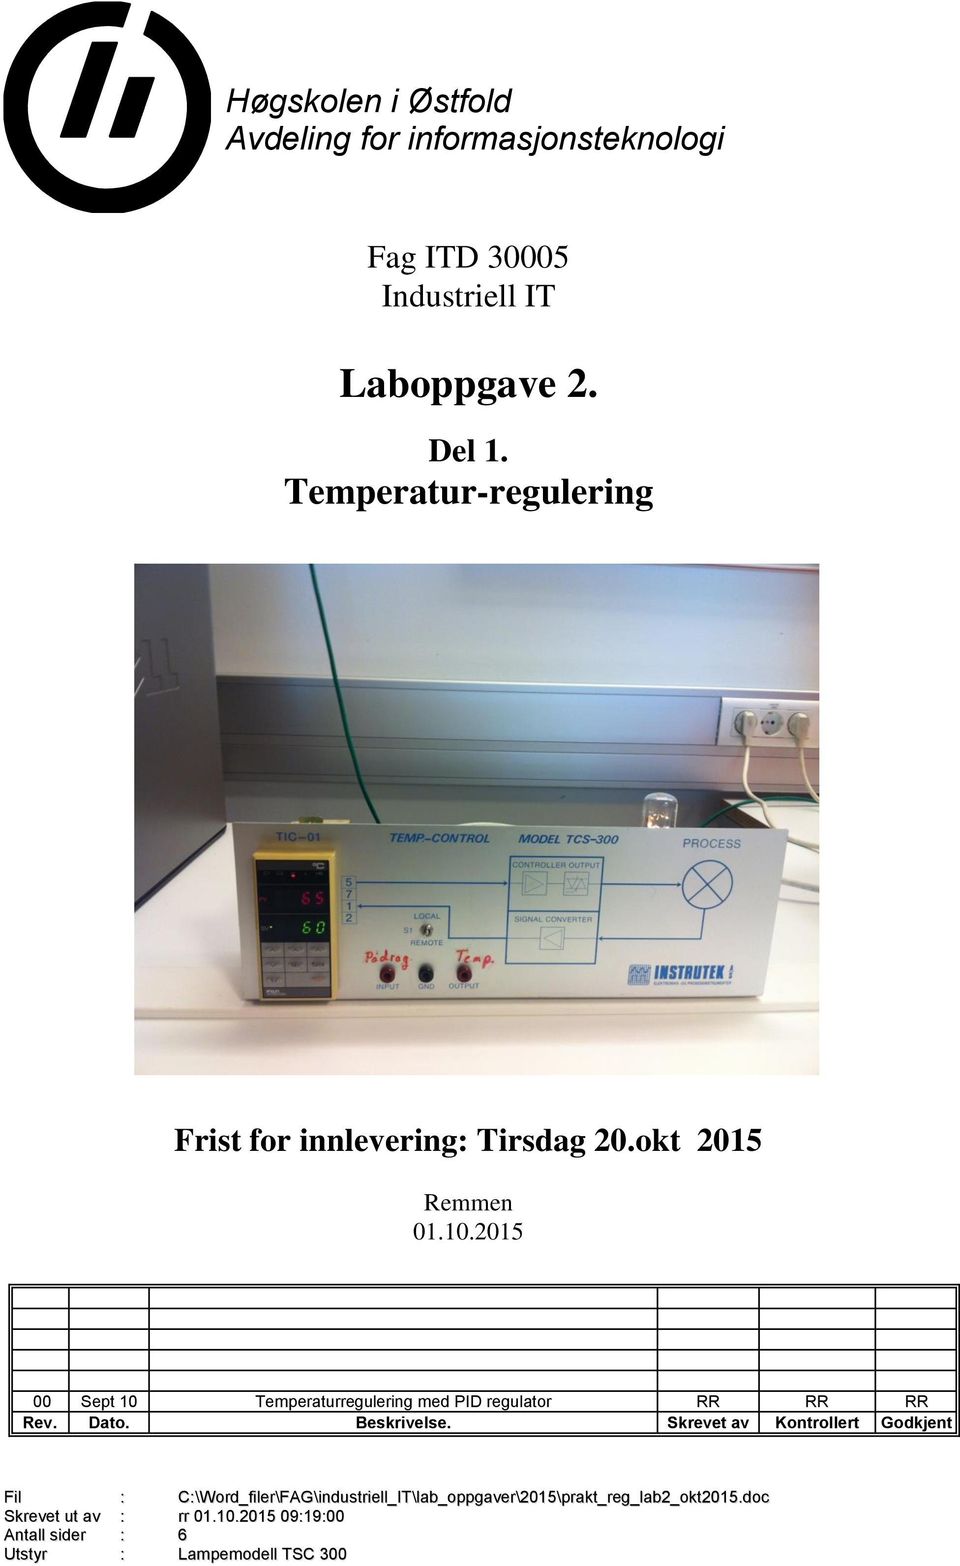 2015 00 Sept 10 Temperaturregulering med PID regulator RR RR RR Rev. Dato. Beskrivelse.